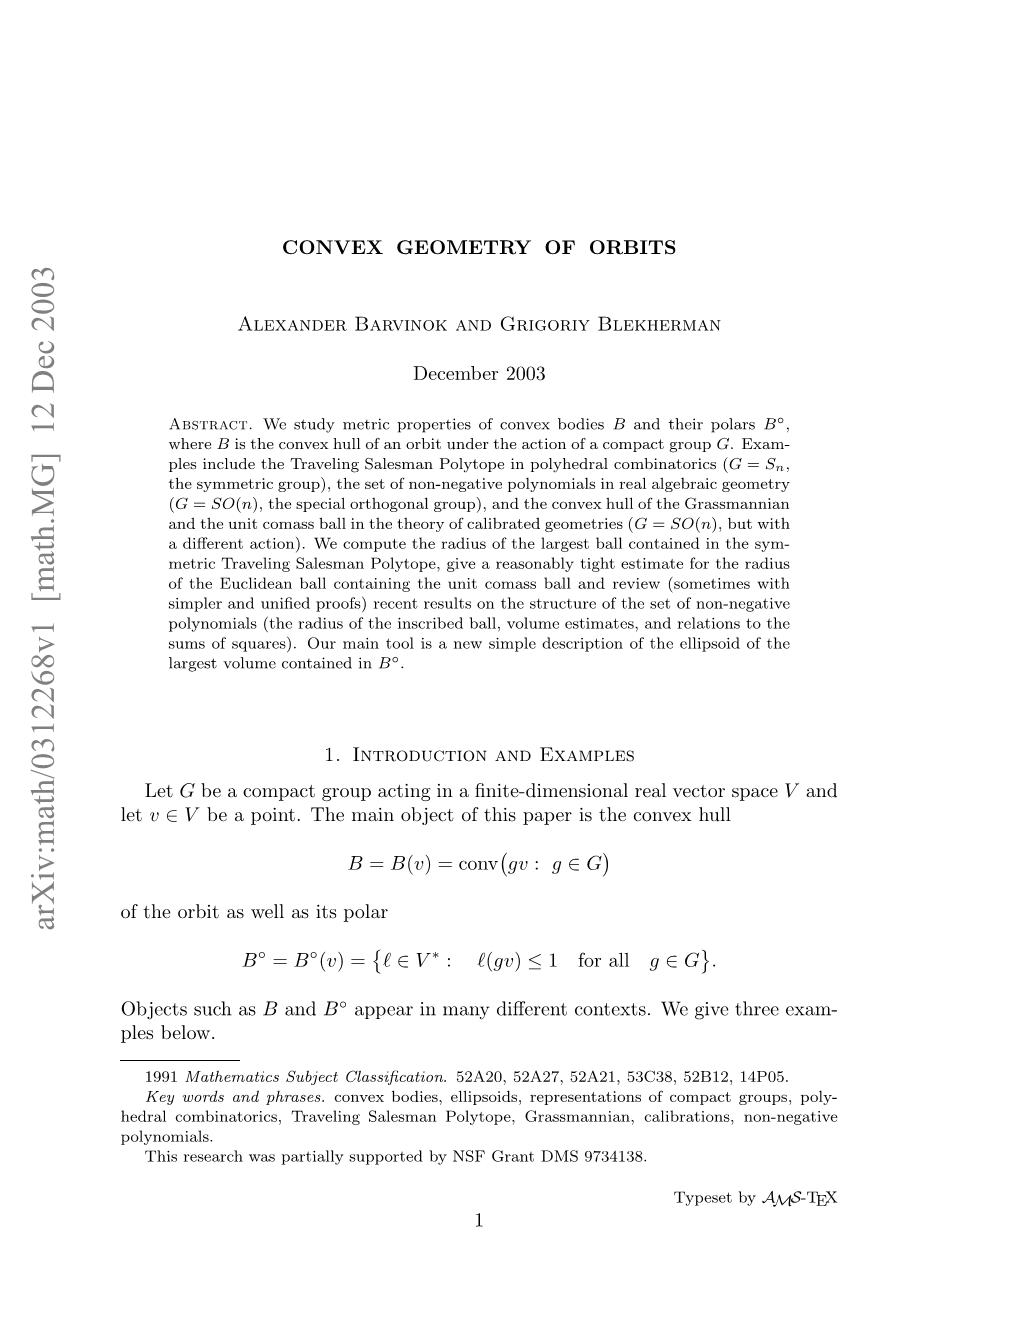 Arxiv:Math/0312268V1 [Math.MG] 12 Dec 2003